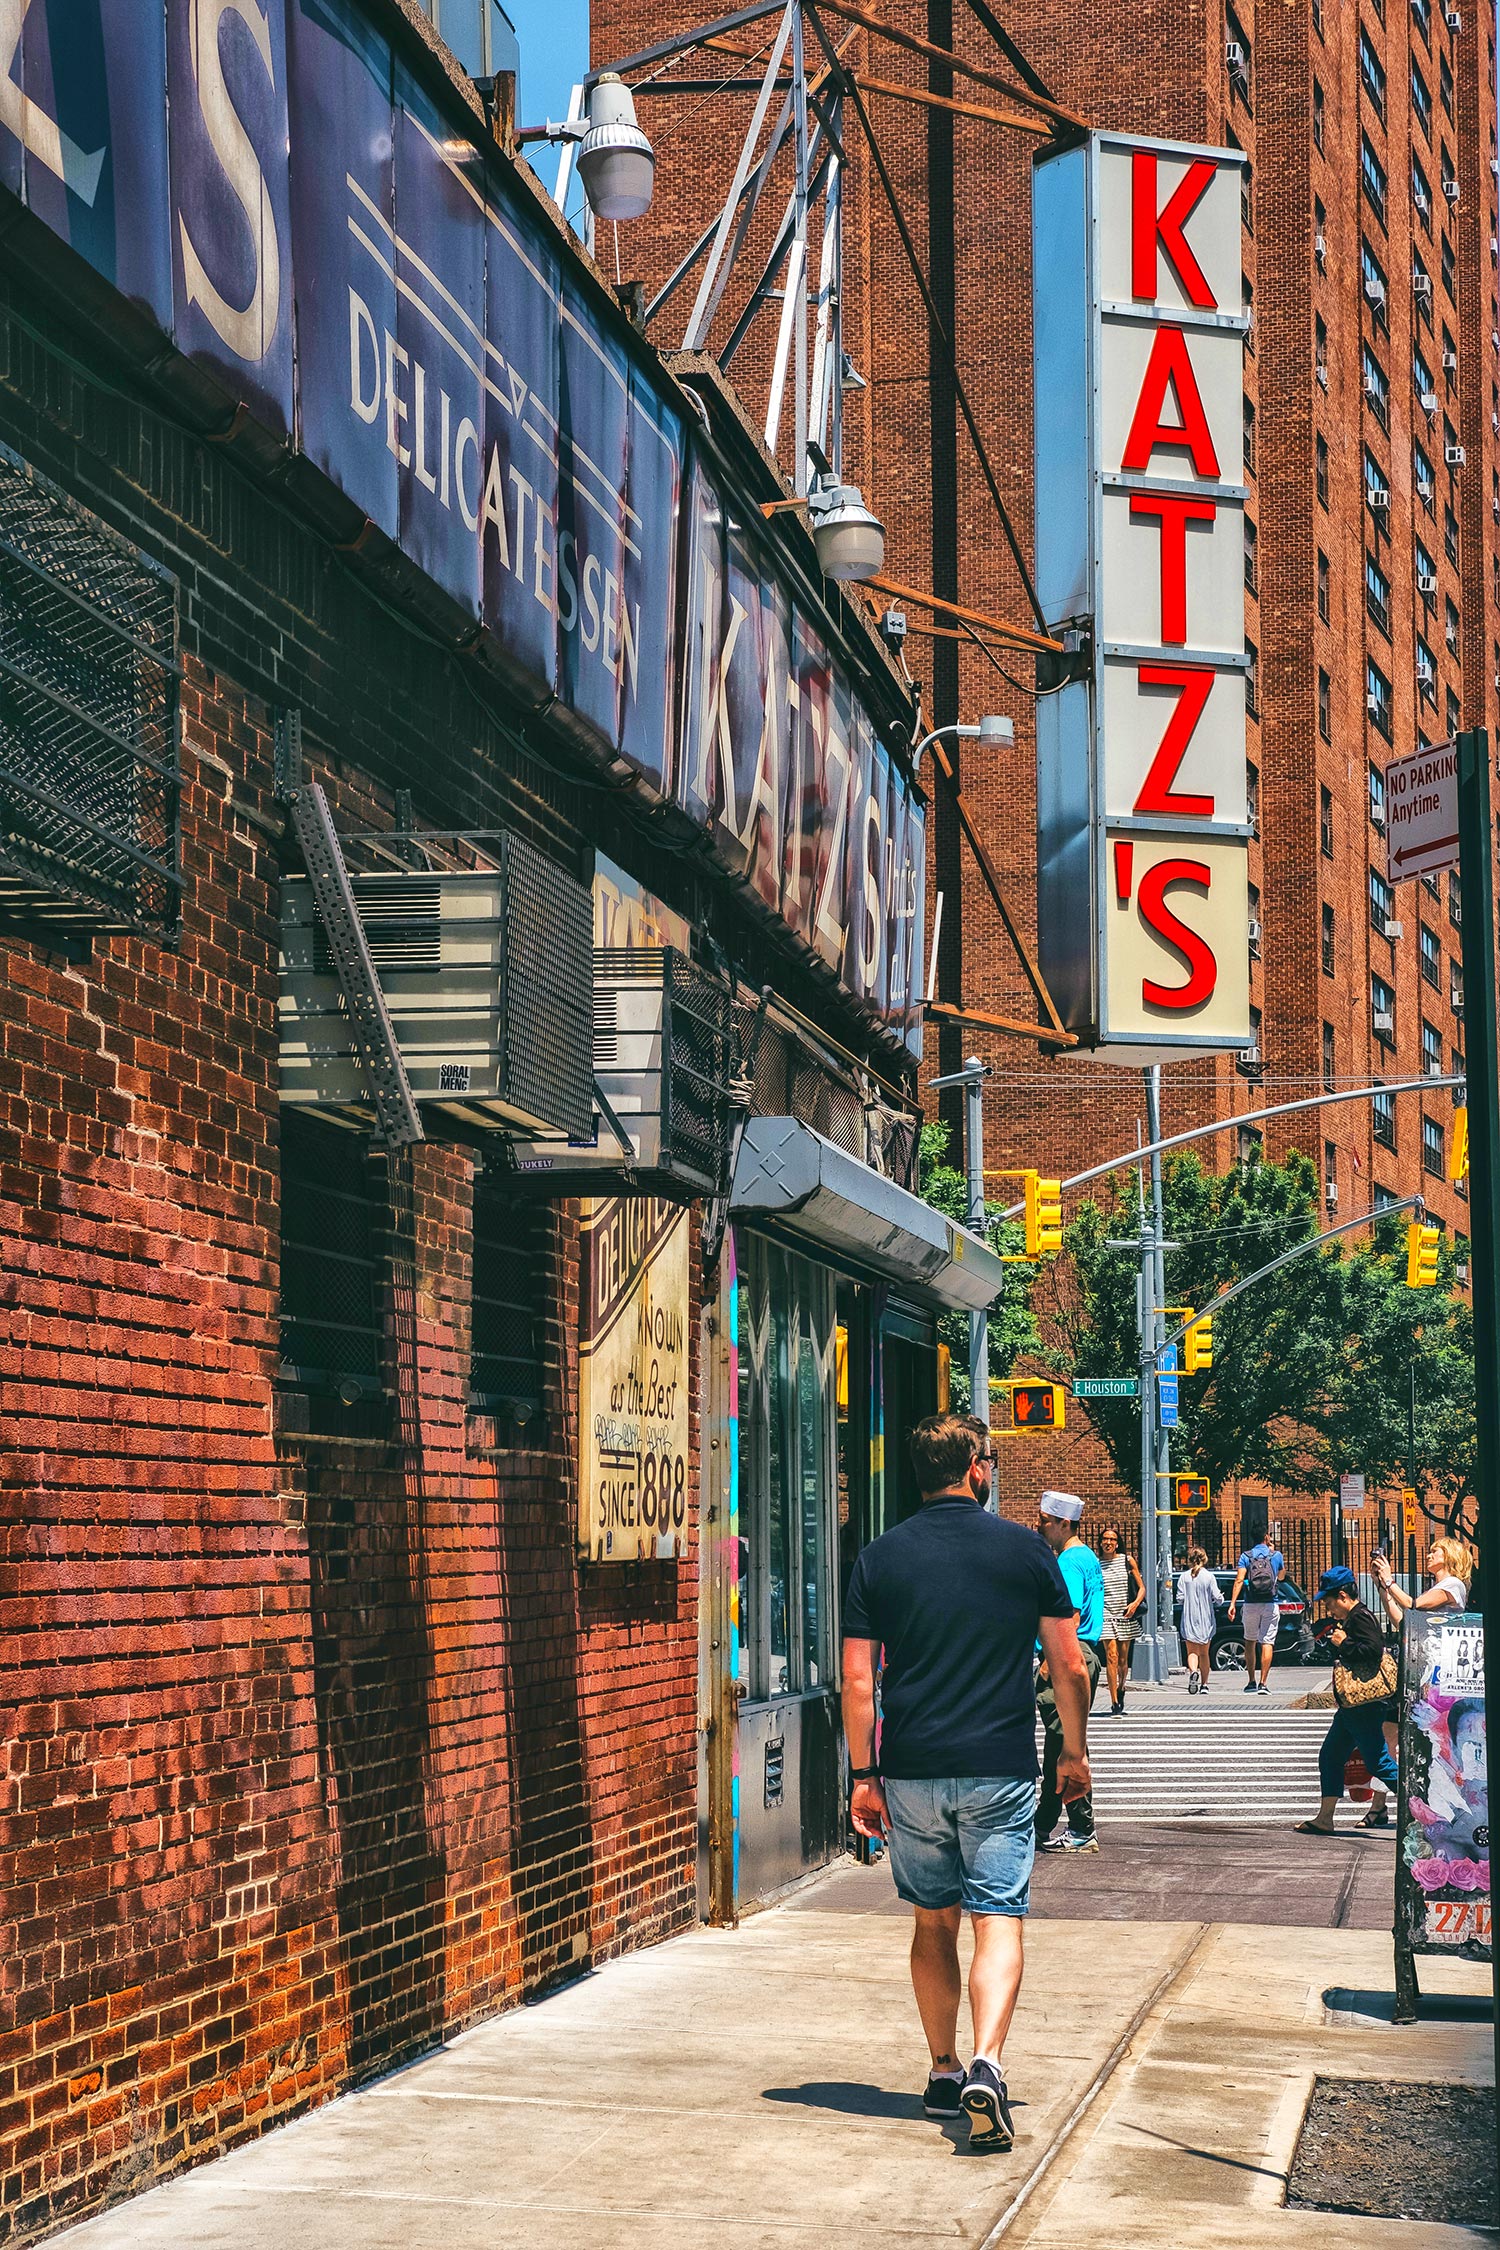 Katz's Delicatessen in de Lower East Side in New York